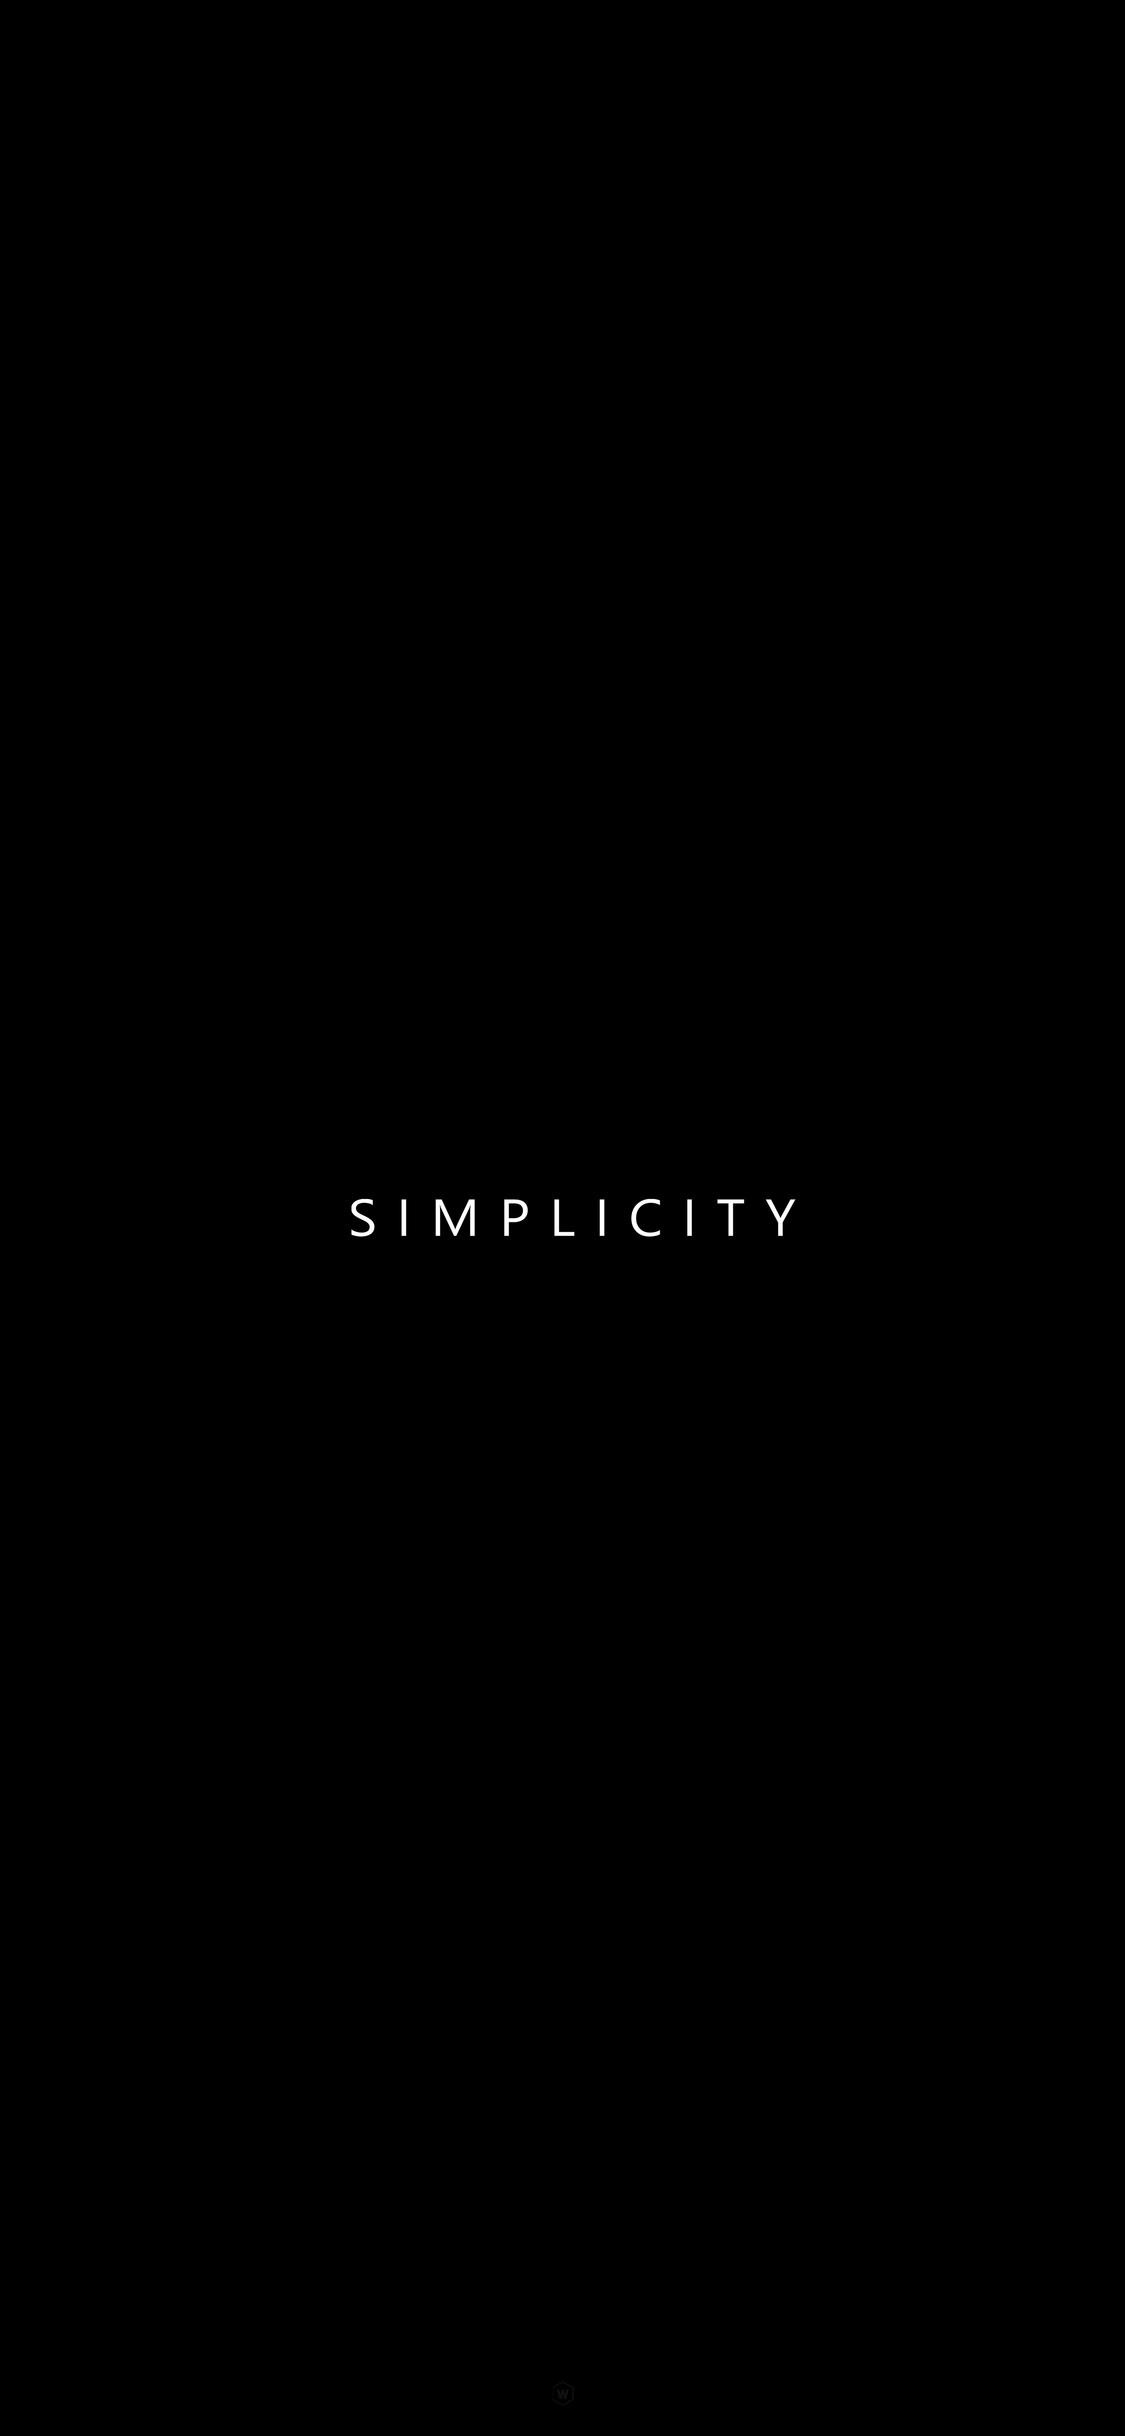 simplicity-tg.jpg